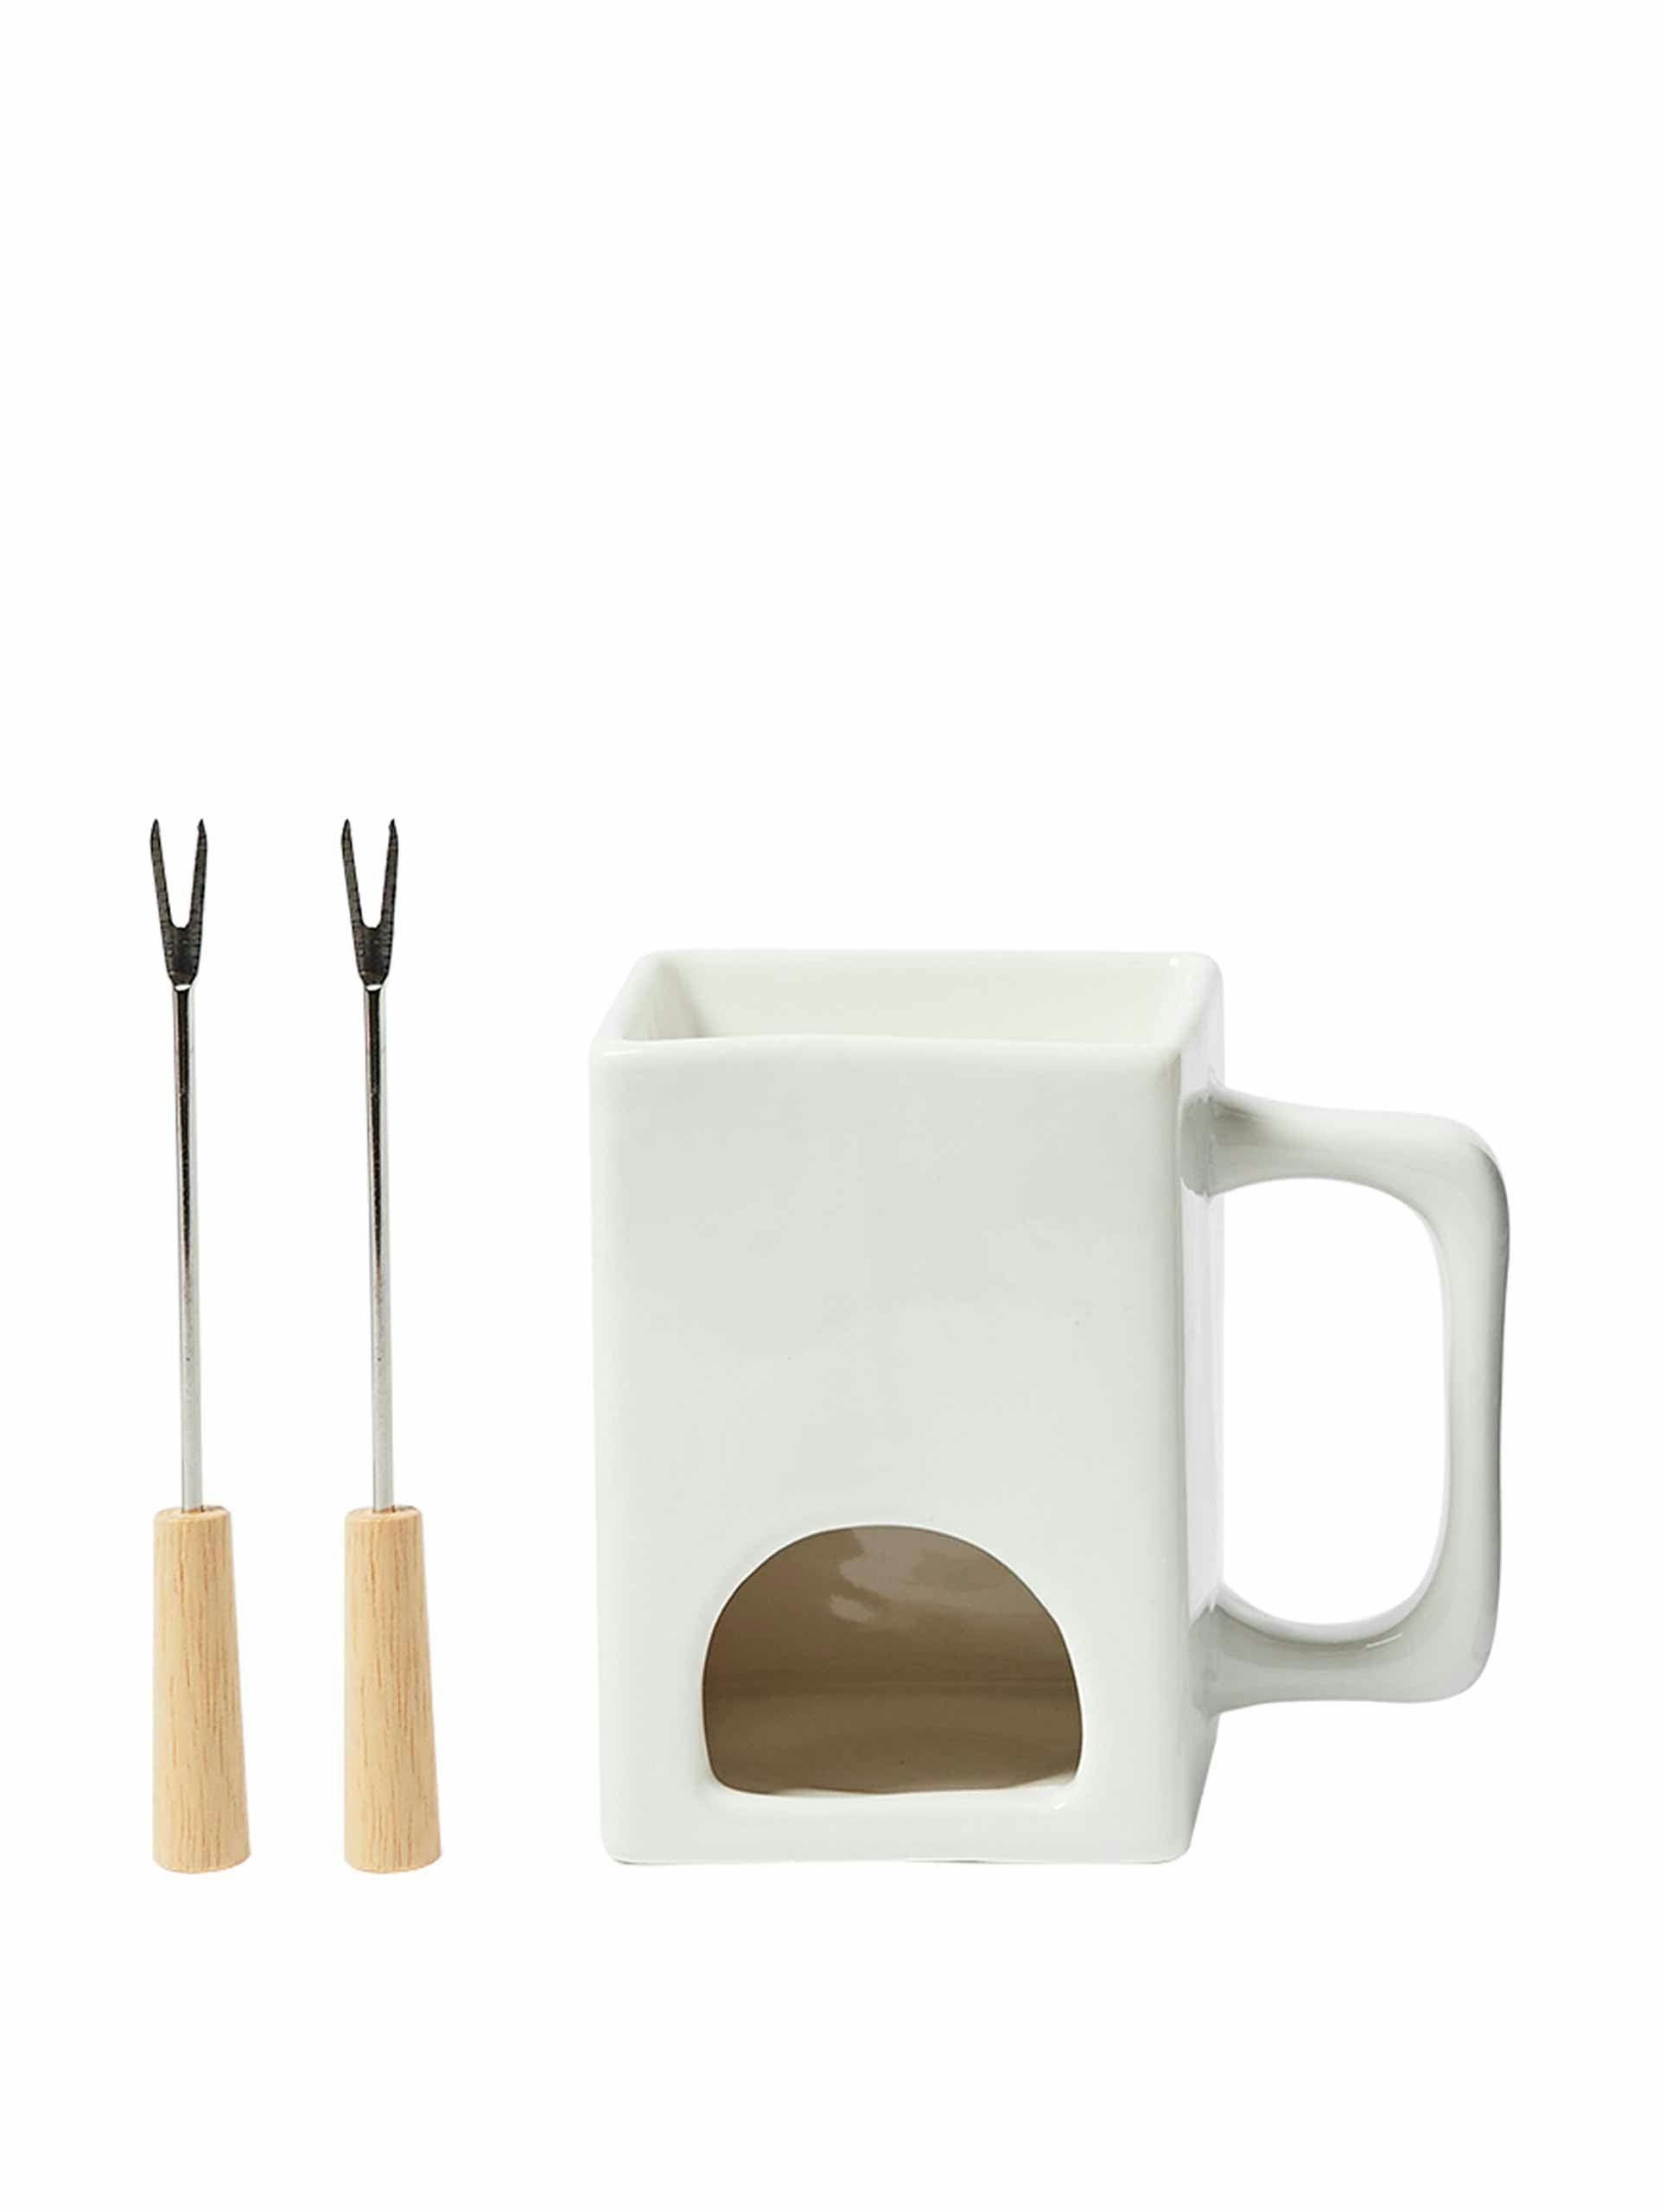 Ceramic fondue for two kit